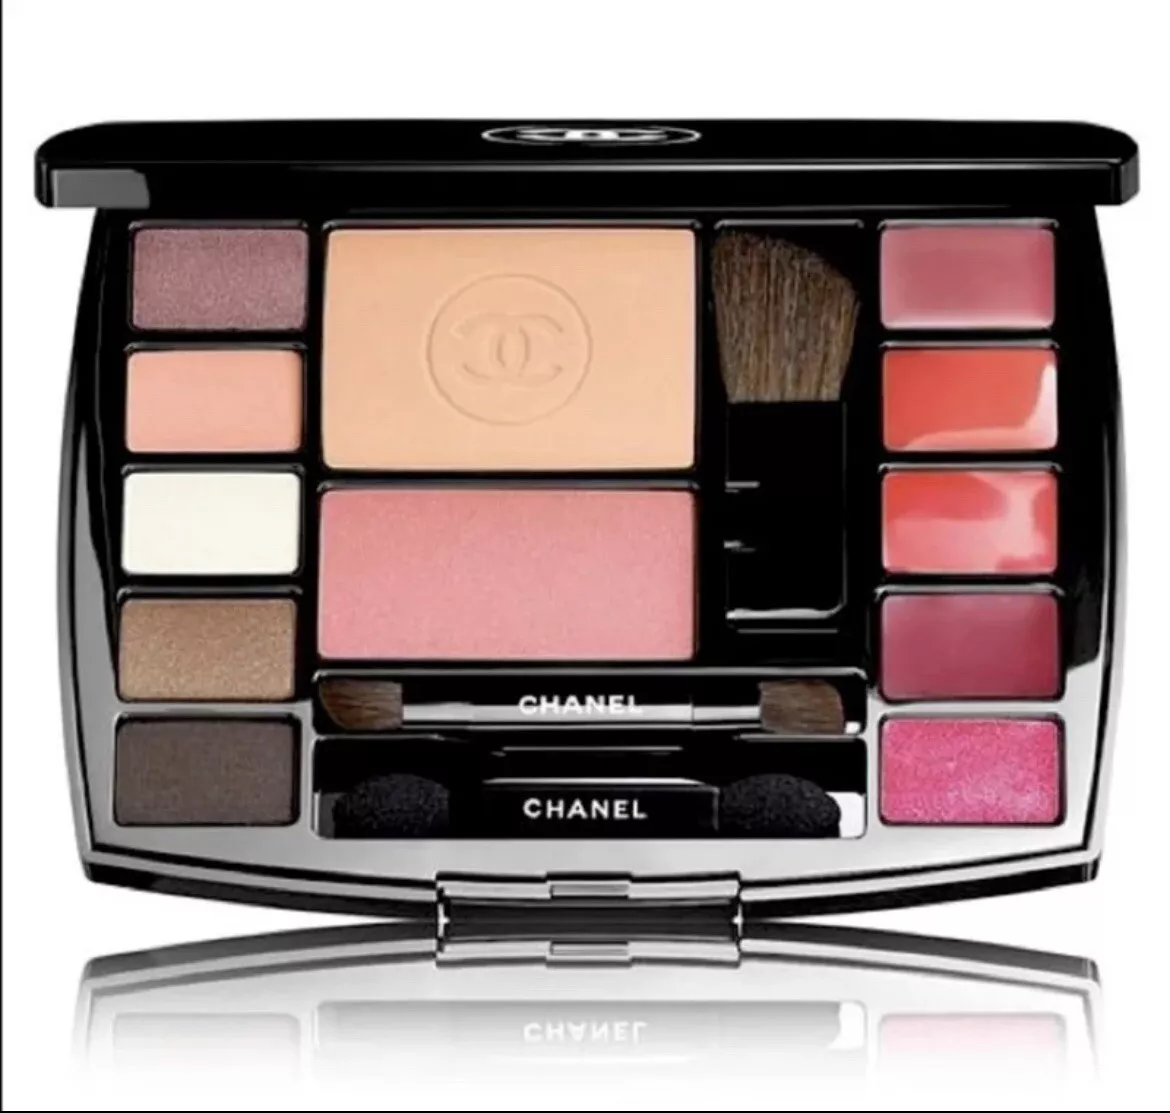 CHANEL, Makeup, Brand New Chanel Eye Essentials Set